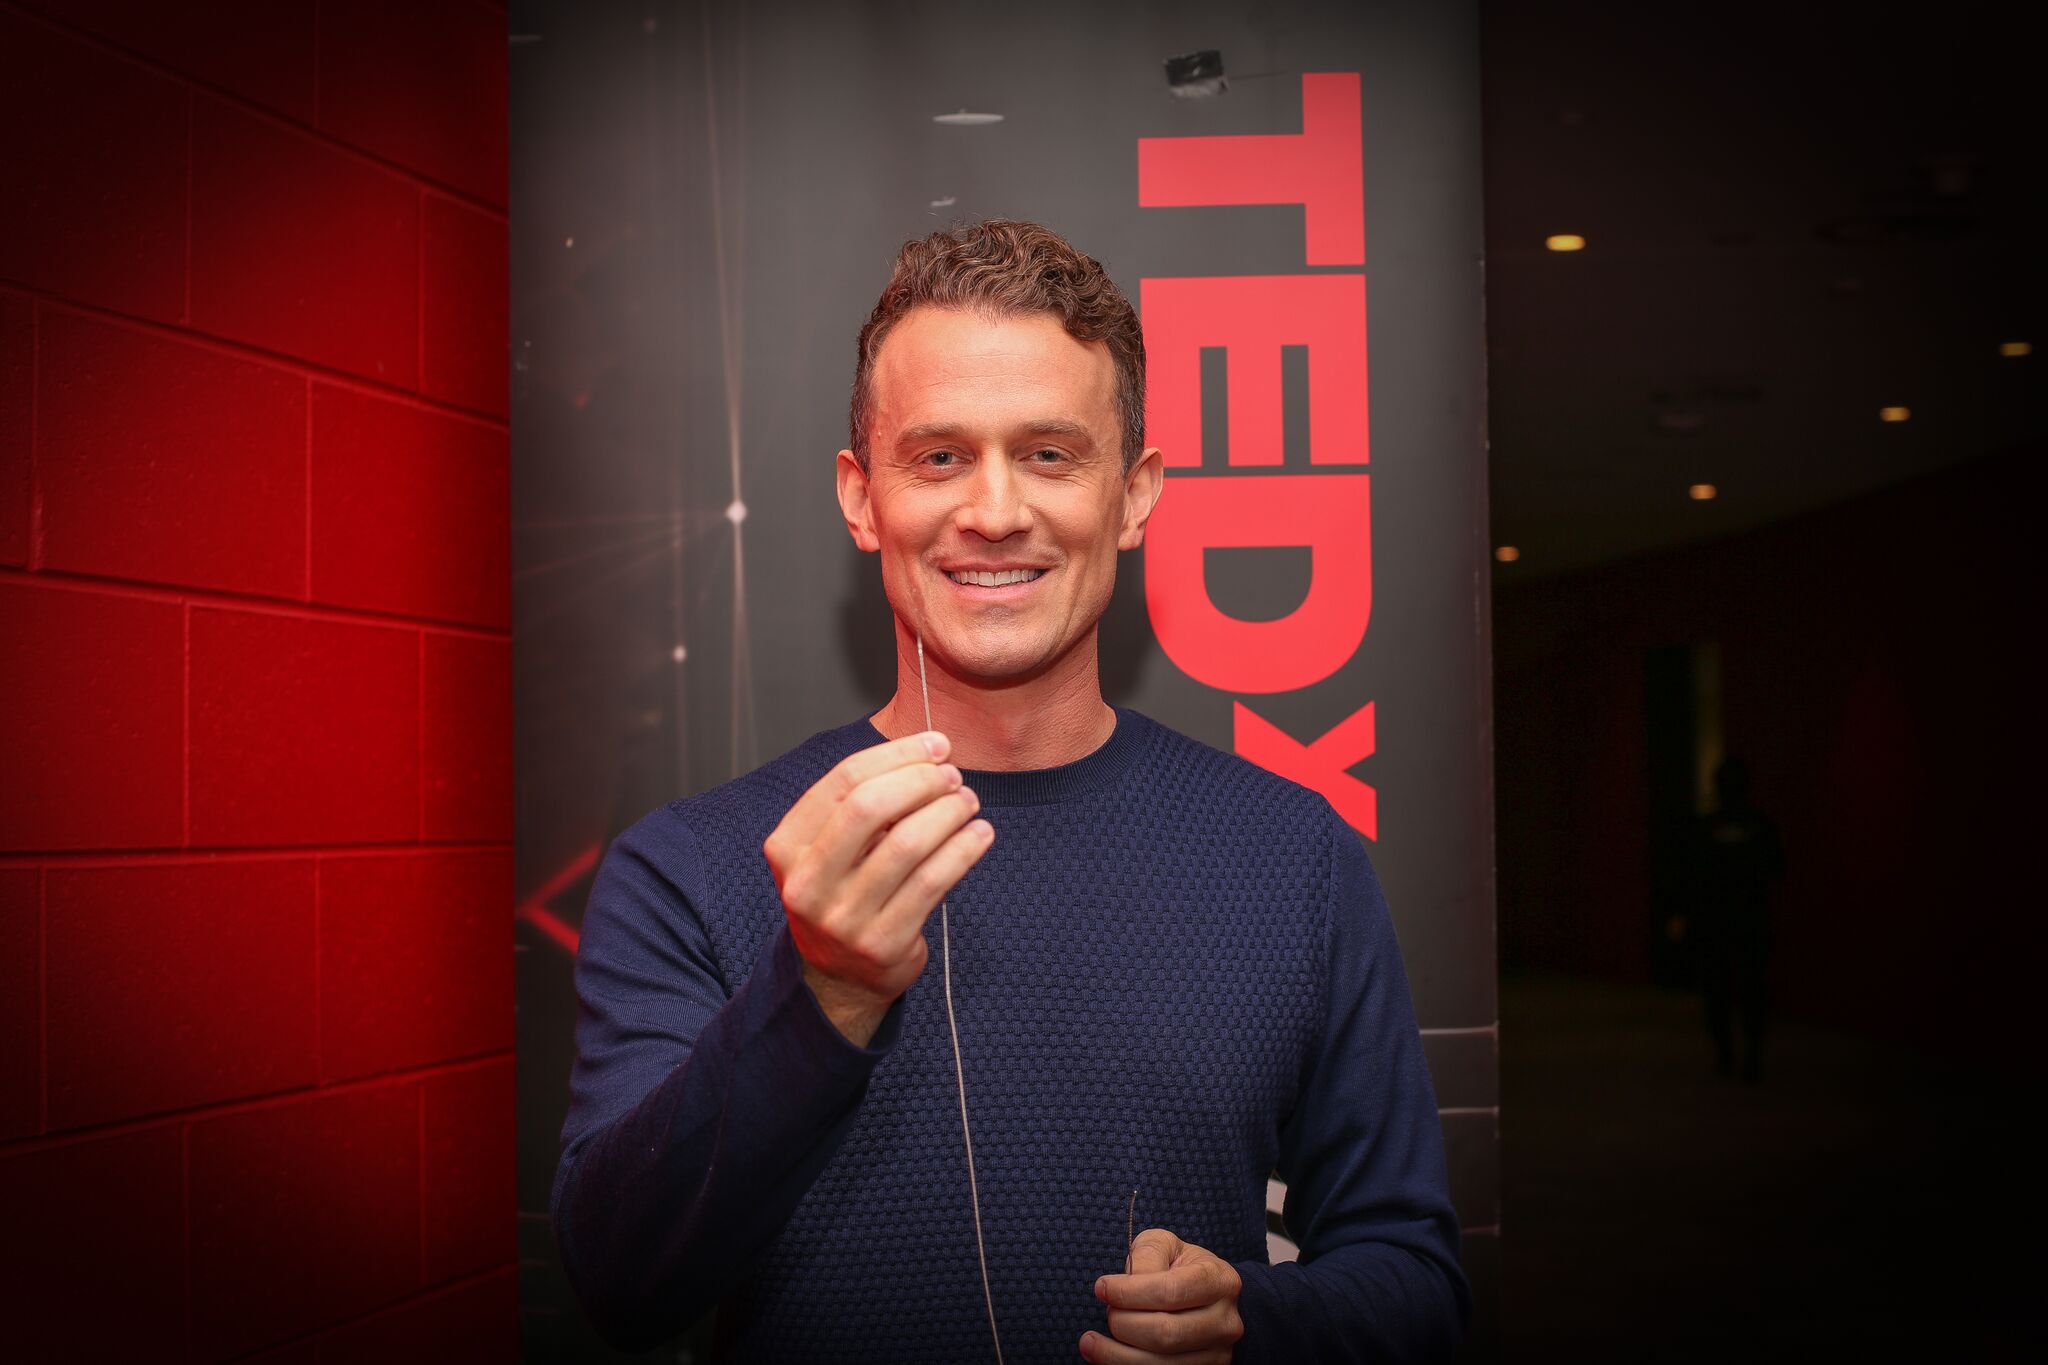 Aussie Genius Floors TEDxSydney With Brain-Enhancing Telepathy Device